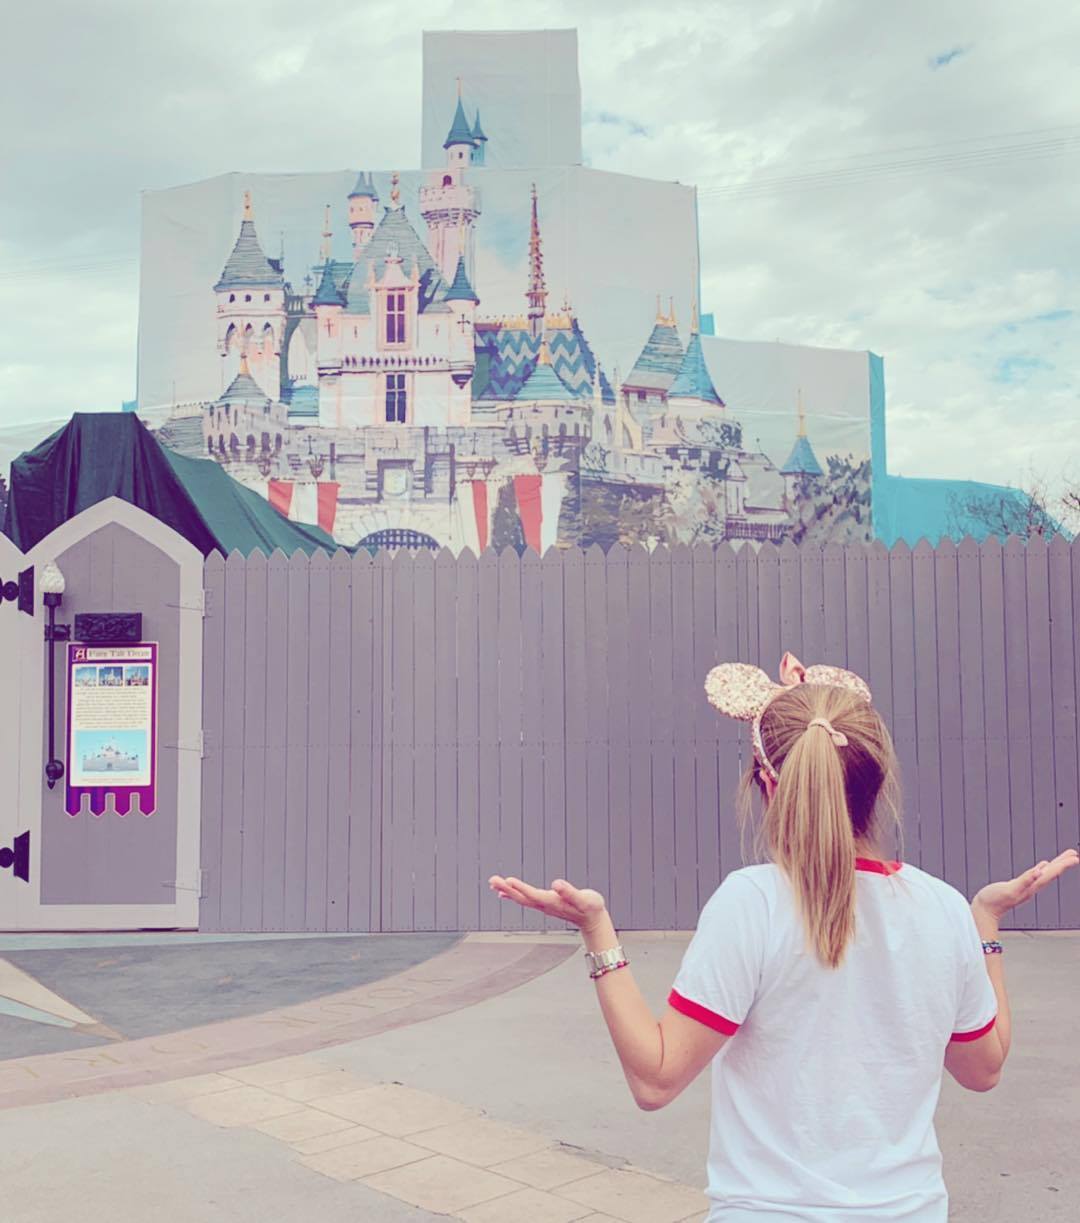 Disneyland Magic Kingdom Cinderella Castle under construction funny "reality" travel photos